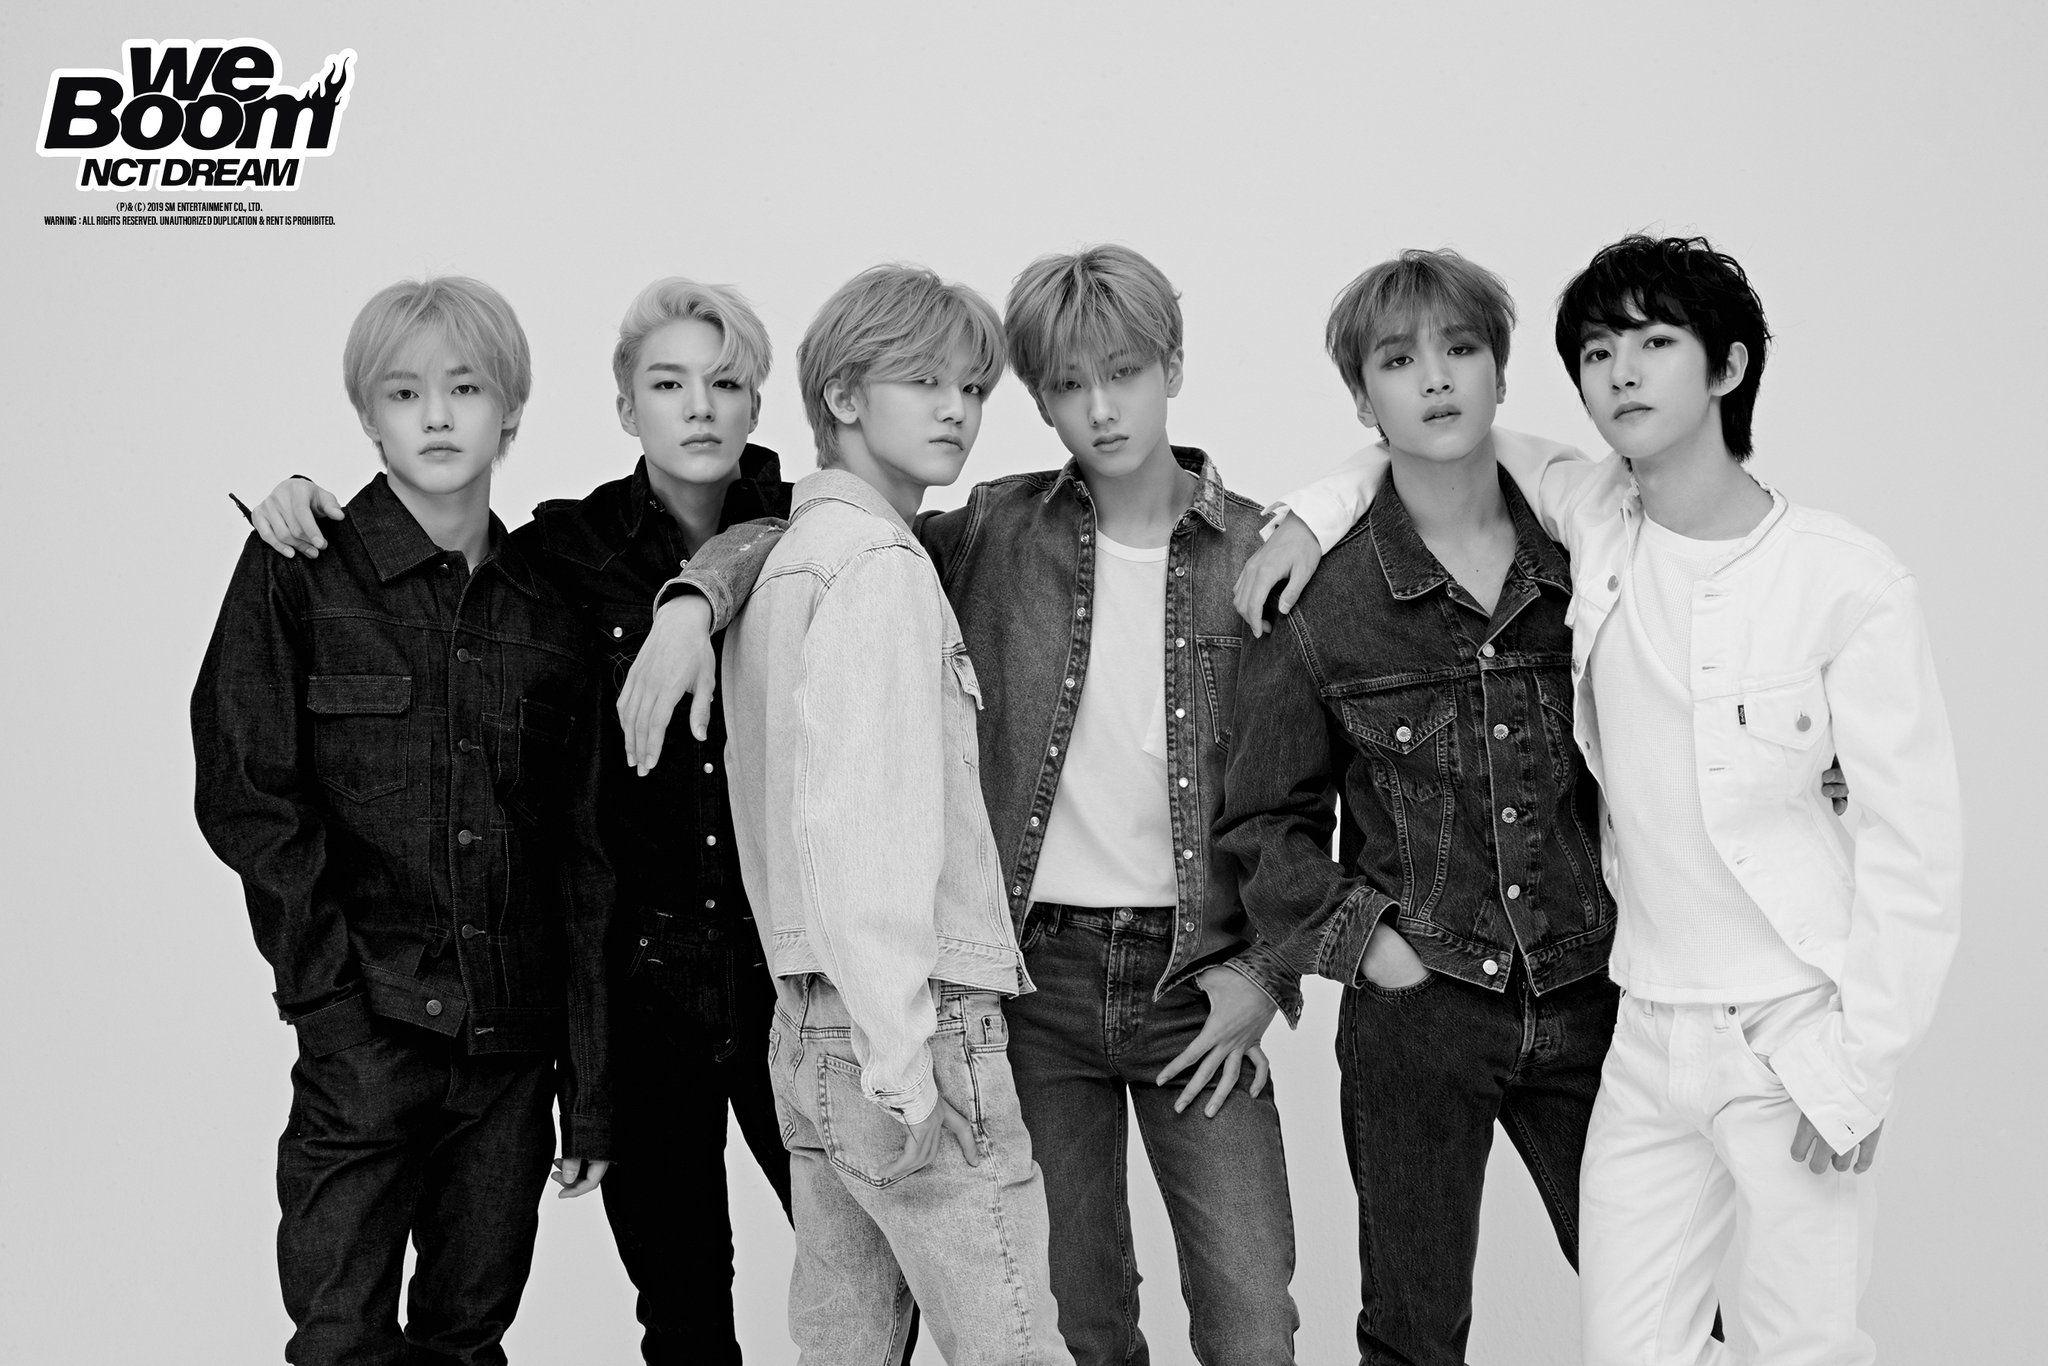 NCT Dream's 3rd Mini Album 'WE BOOM' Concept Photo